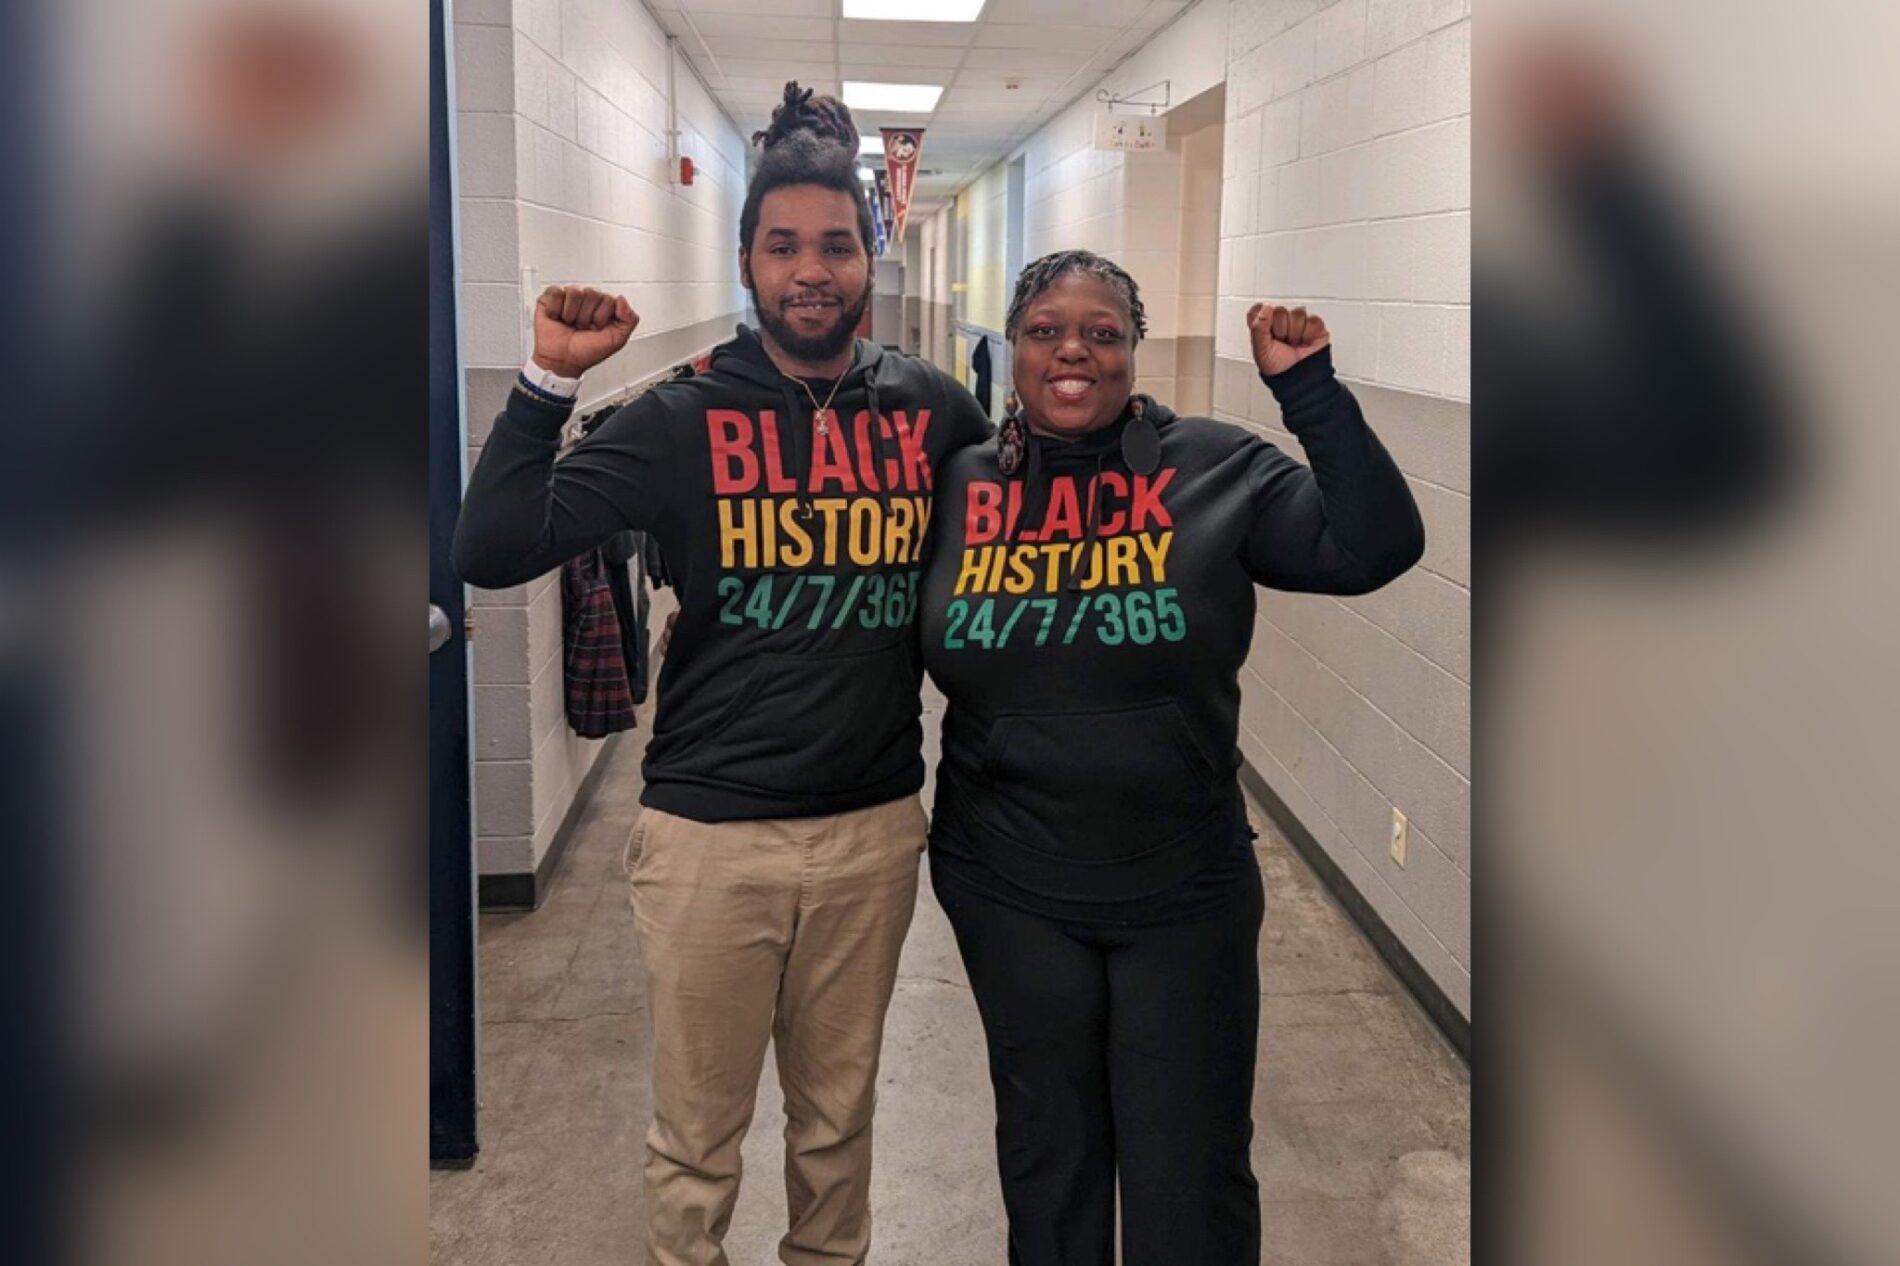 Mr. Ferguson with friend in hallway wearing colorful Black History tshirt.